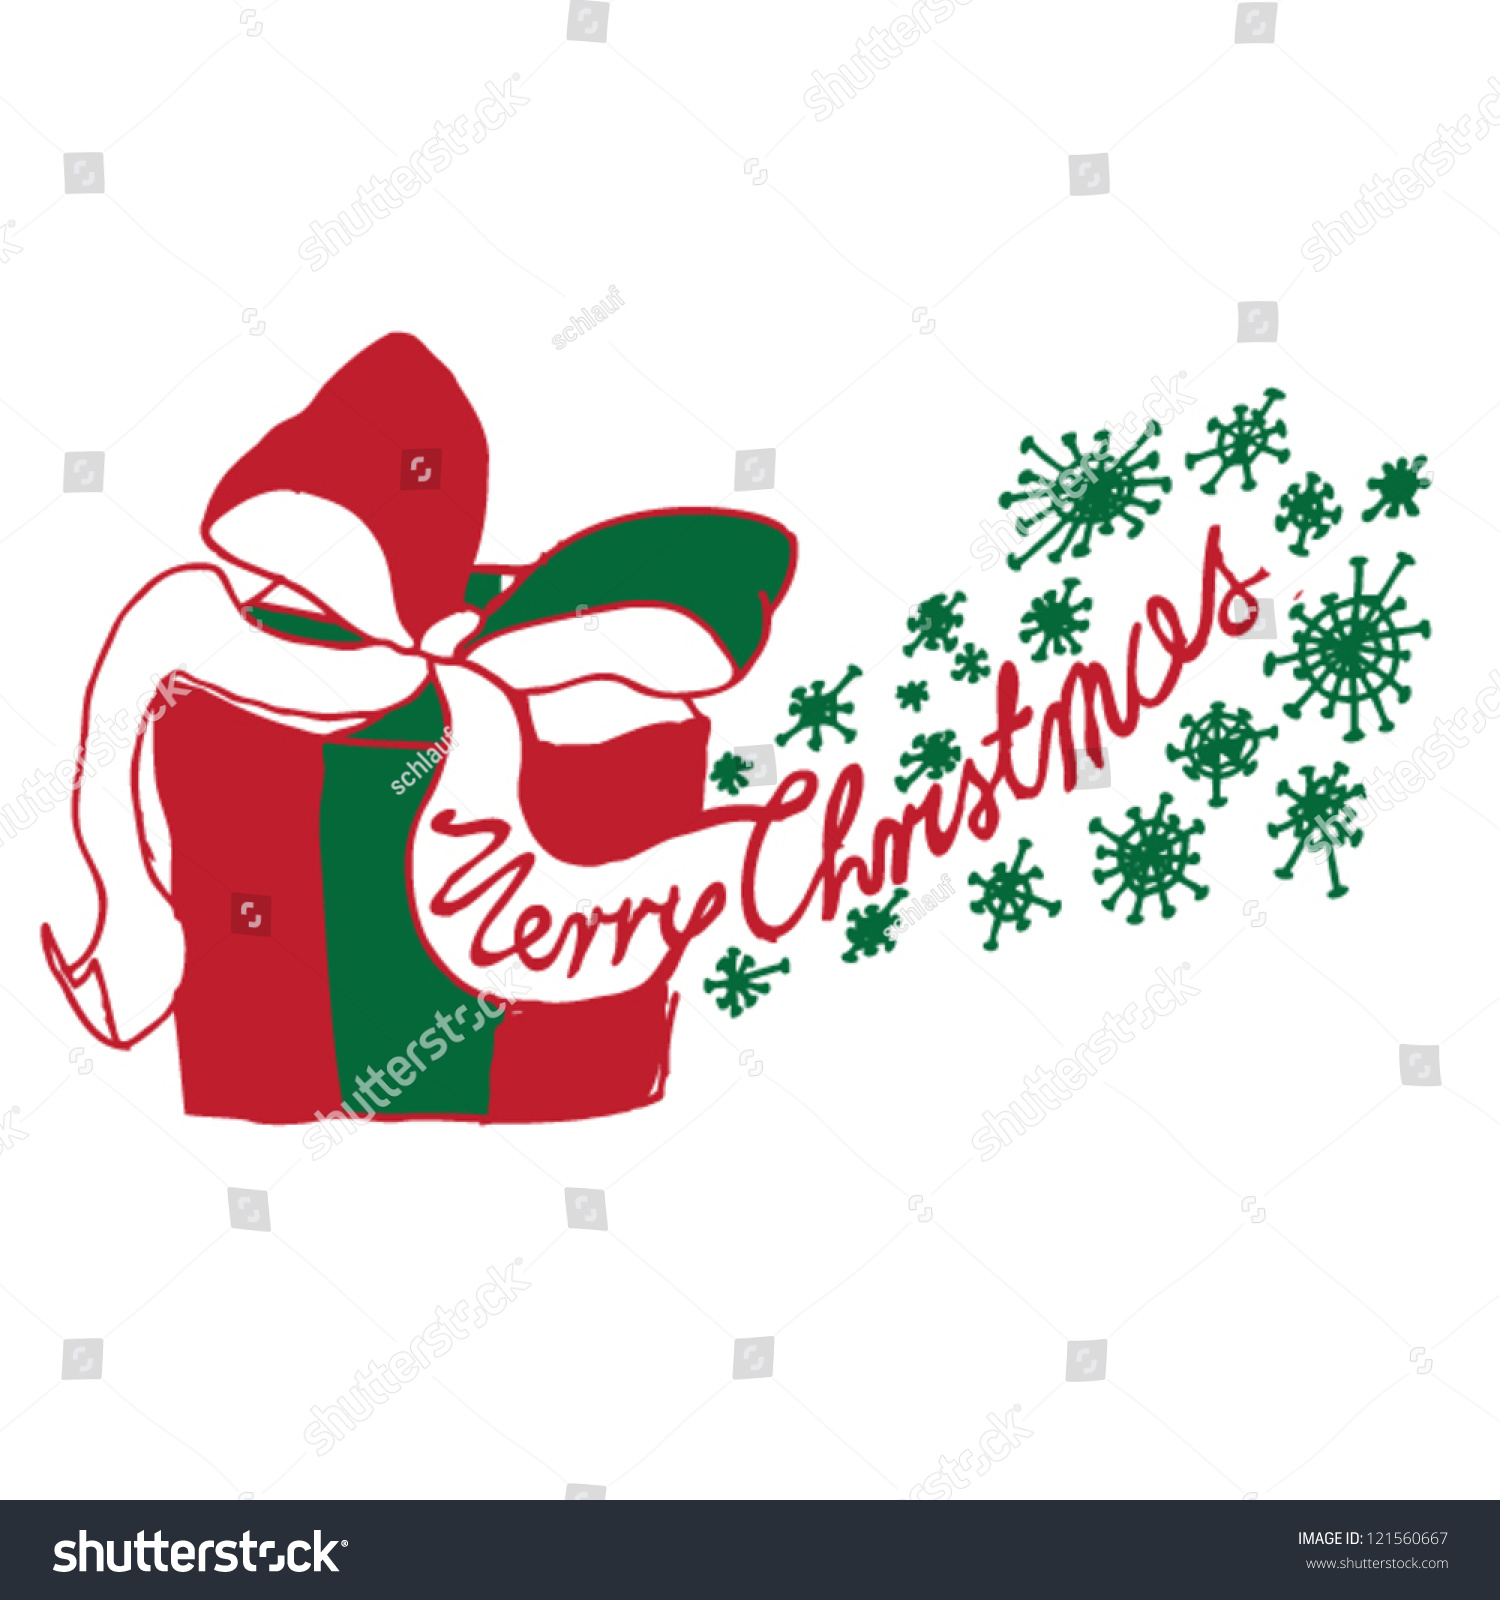 Christmas Stock Vector Illustration 121560667 : Shutterstock